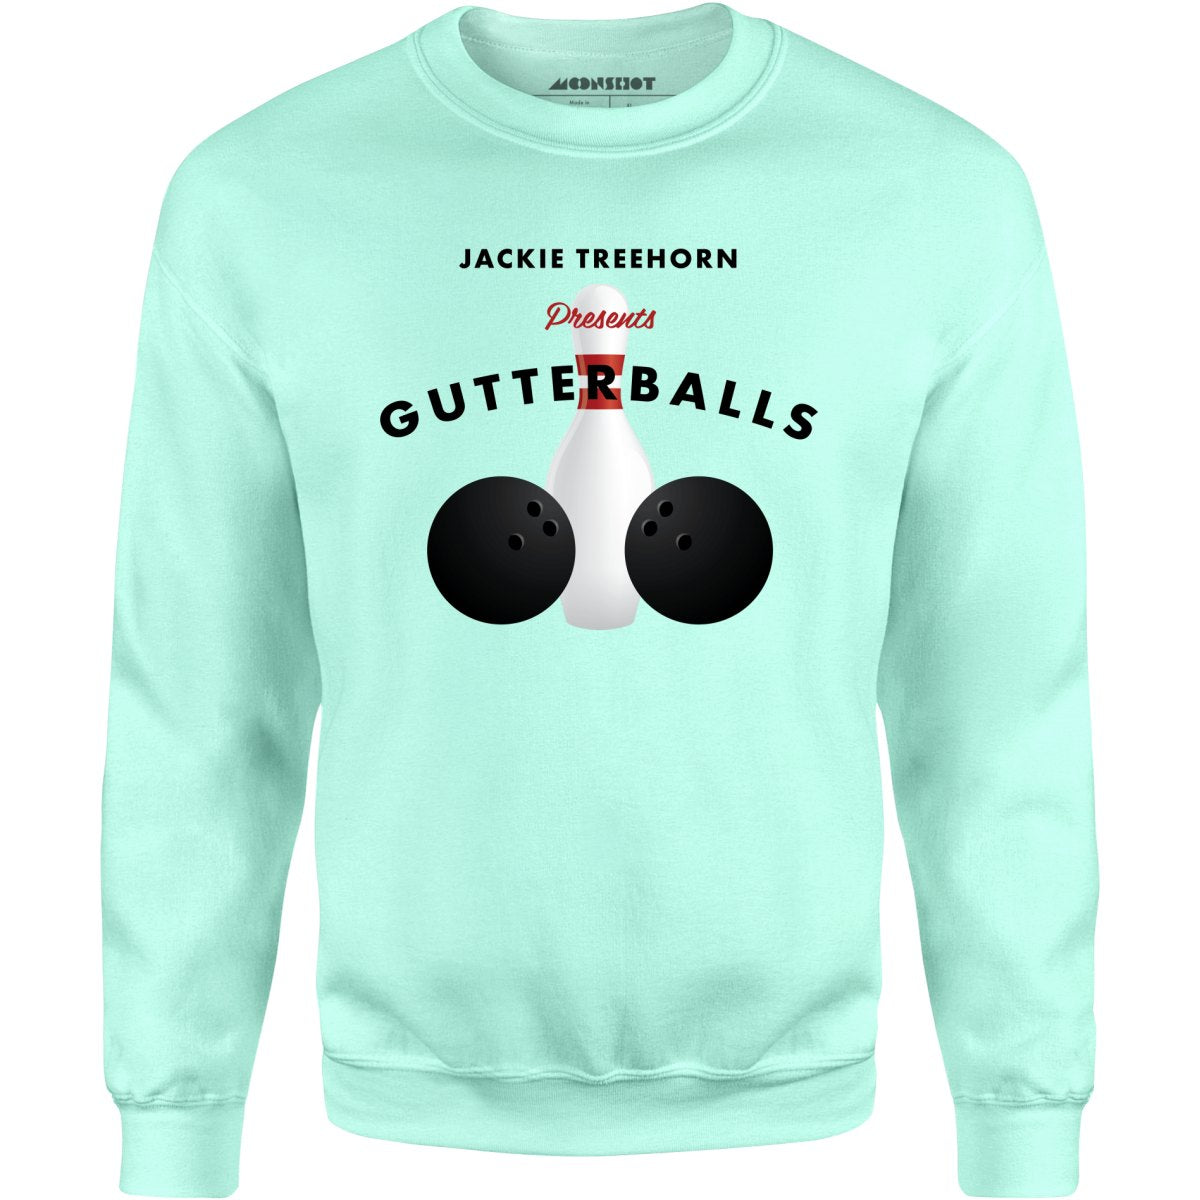 Jackie Treehorn Presents Gutterballs - Unisex Sweatshirt